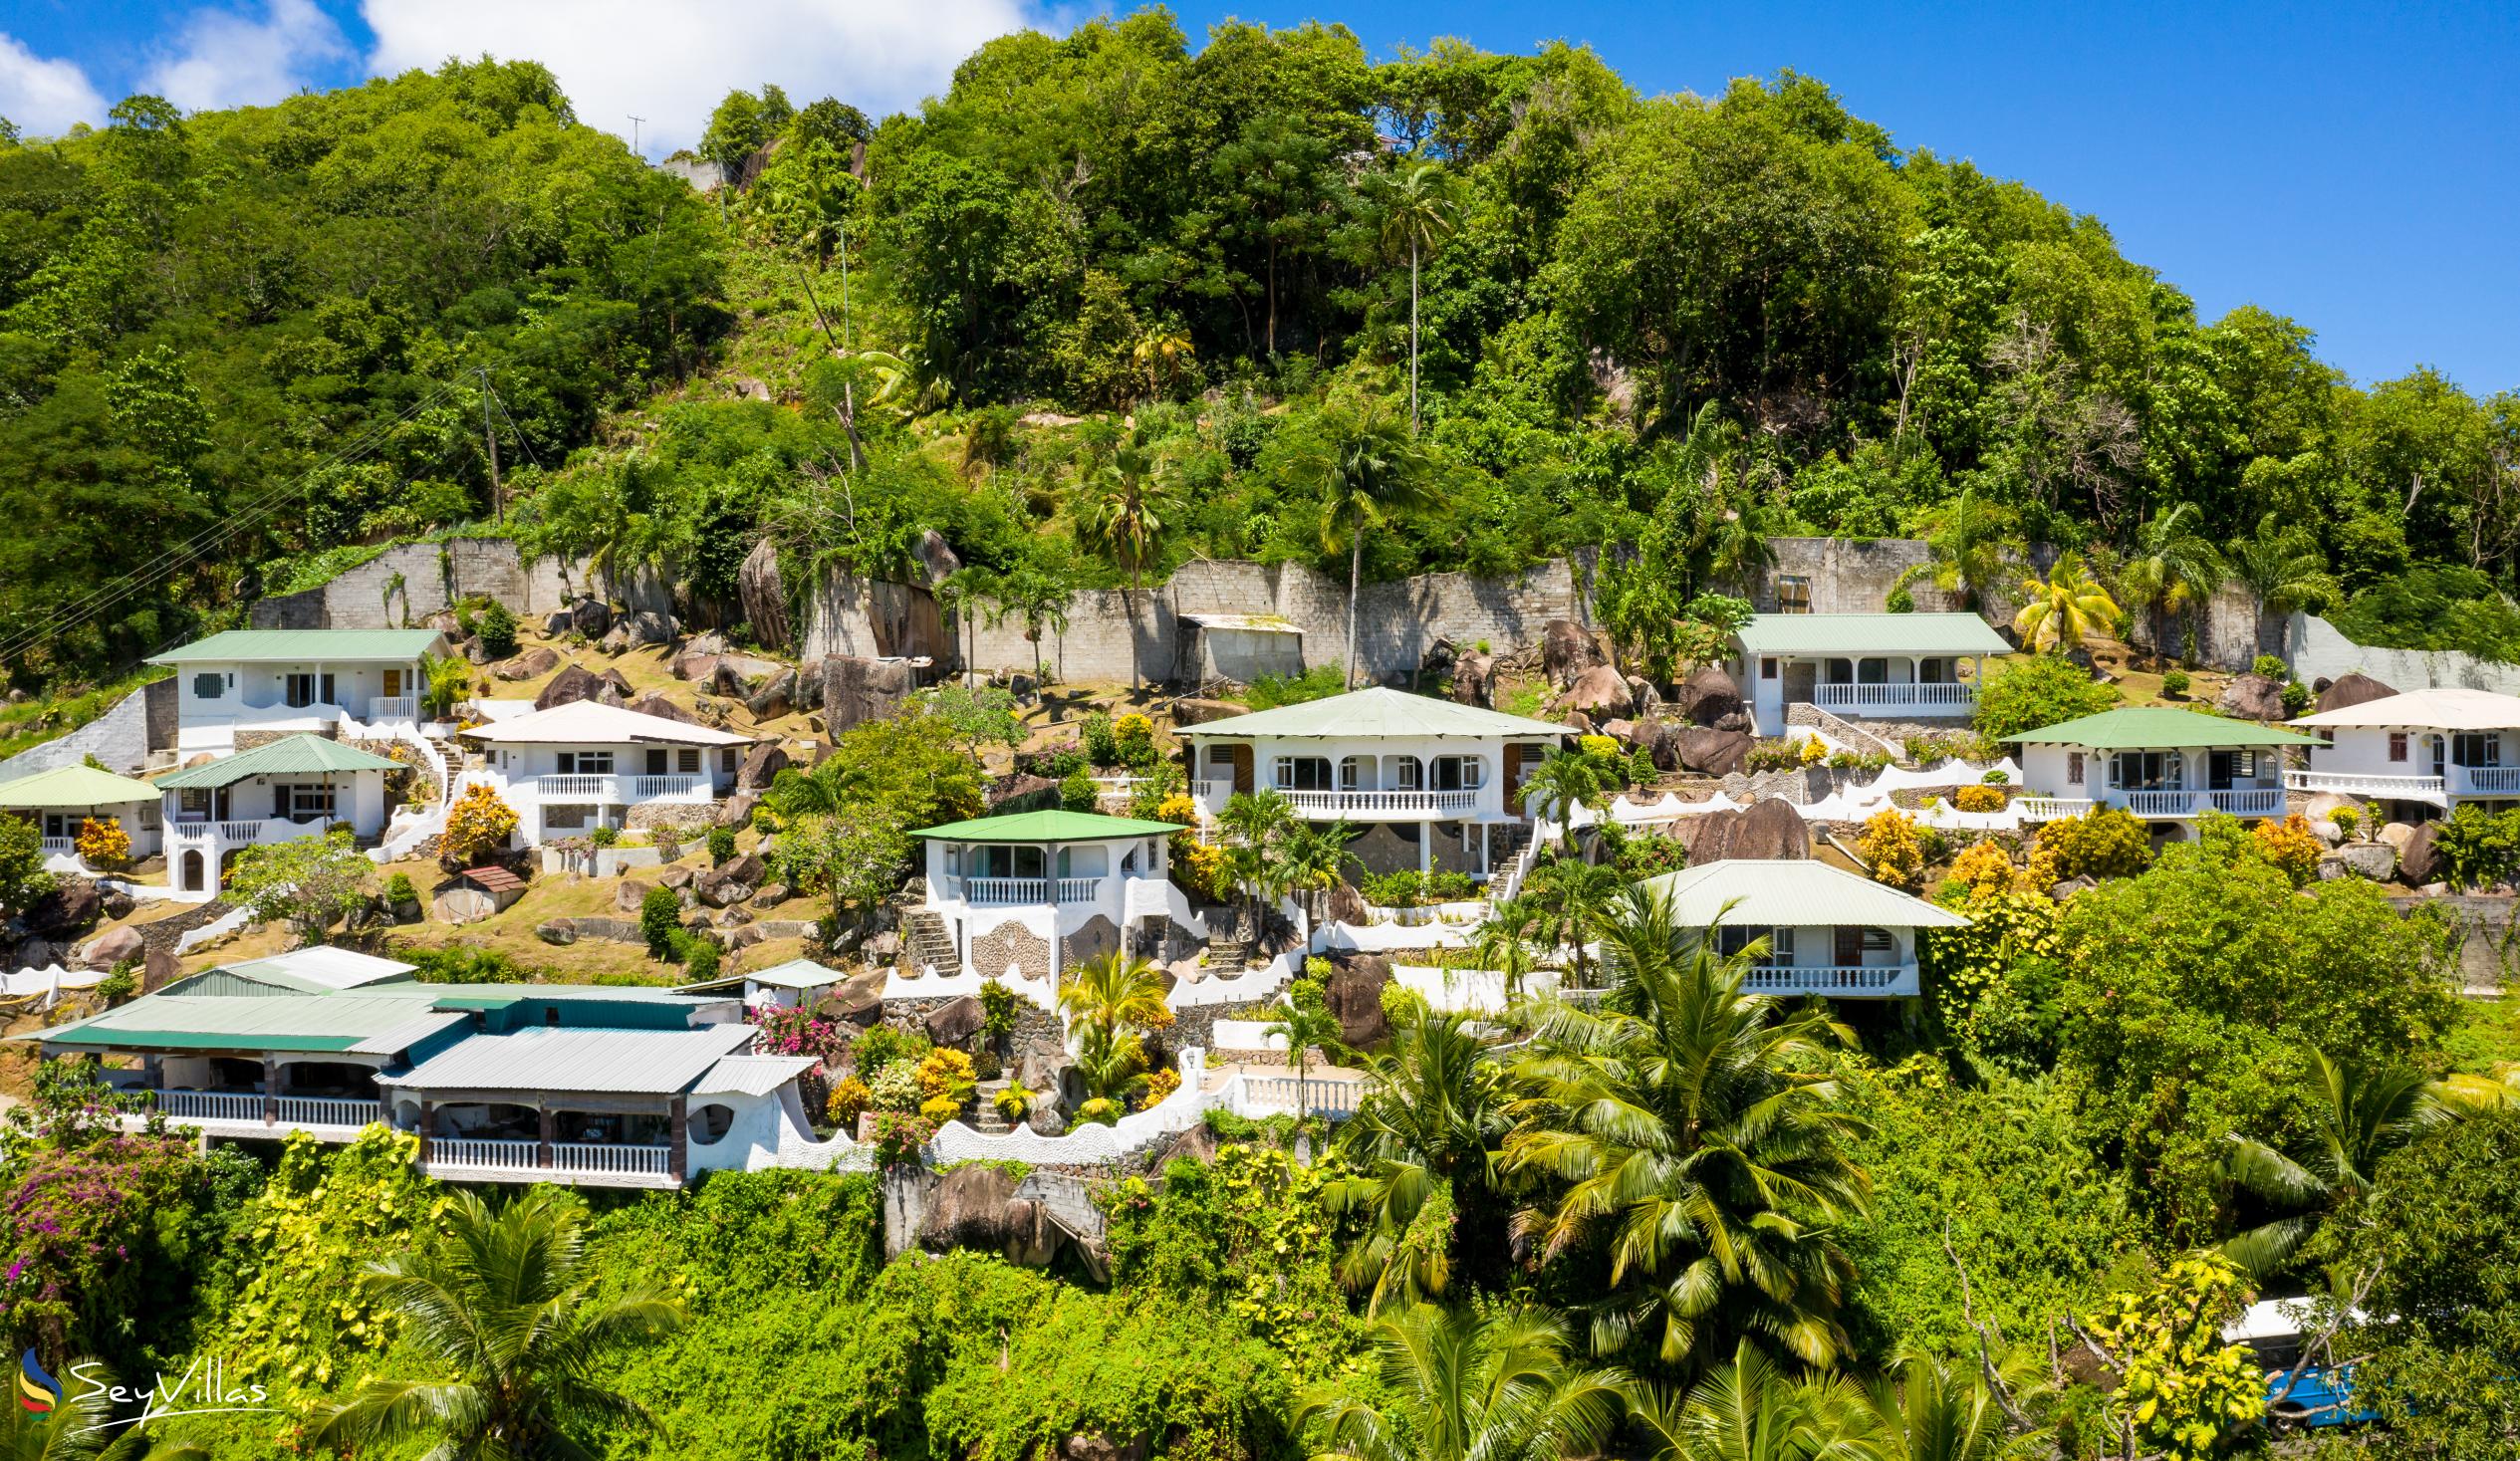 Photo 2: Lazare Picault Hotel - Outdoor area - Mahé (Seychelles)